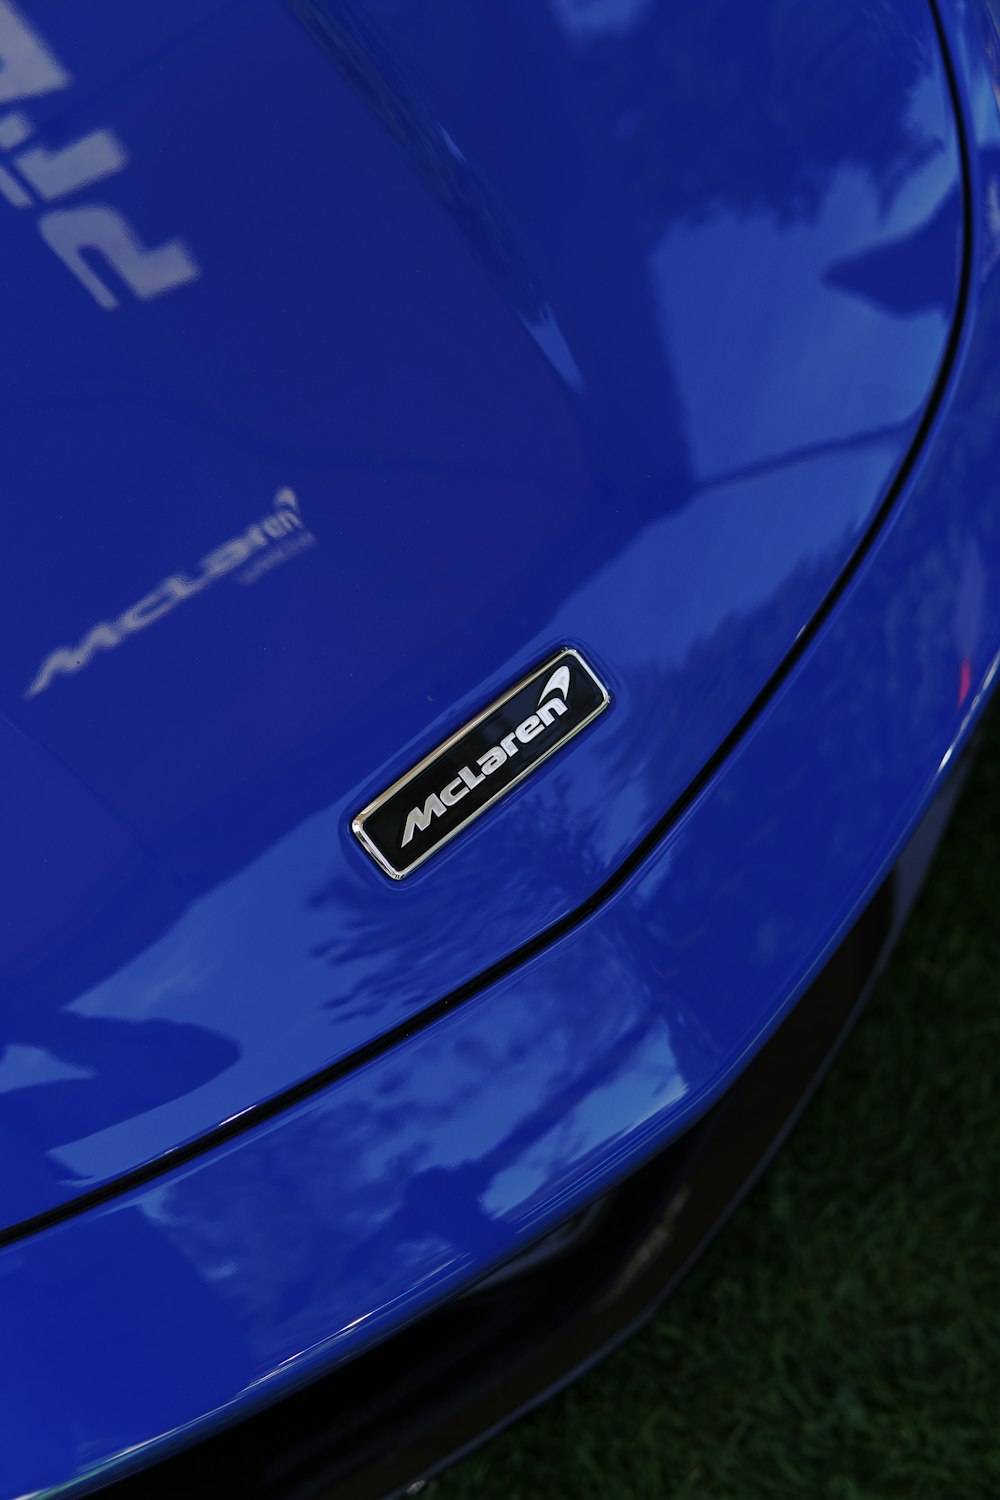 a close up of the emblem on a blue sports car